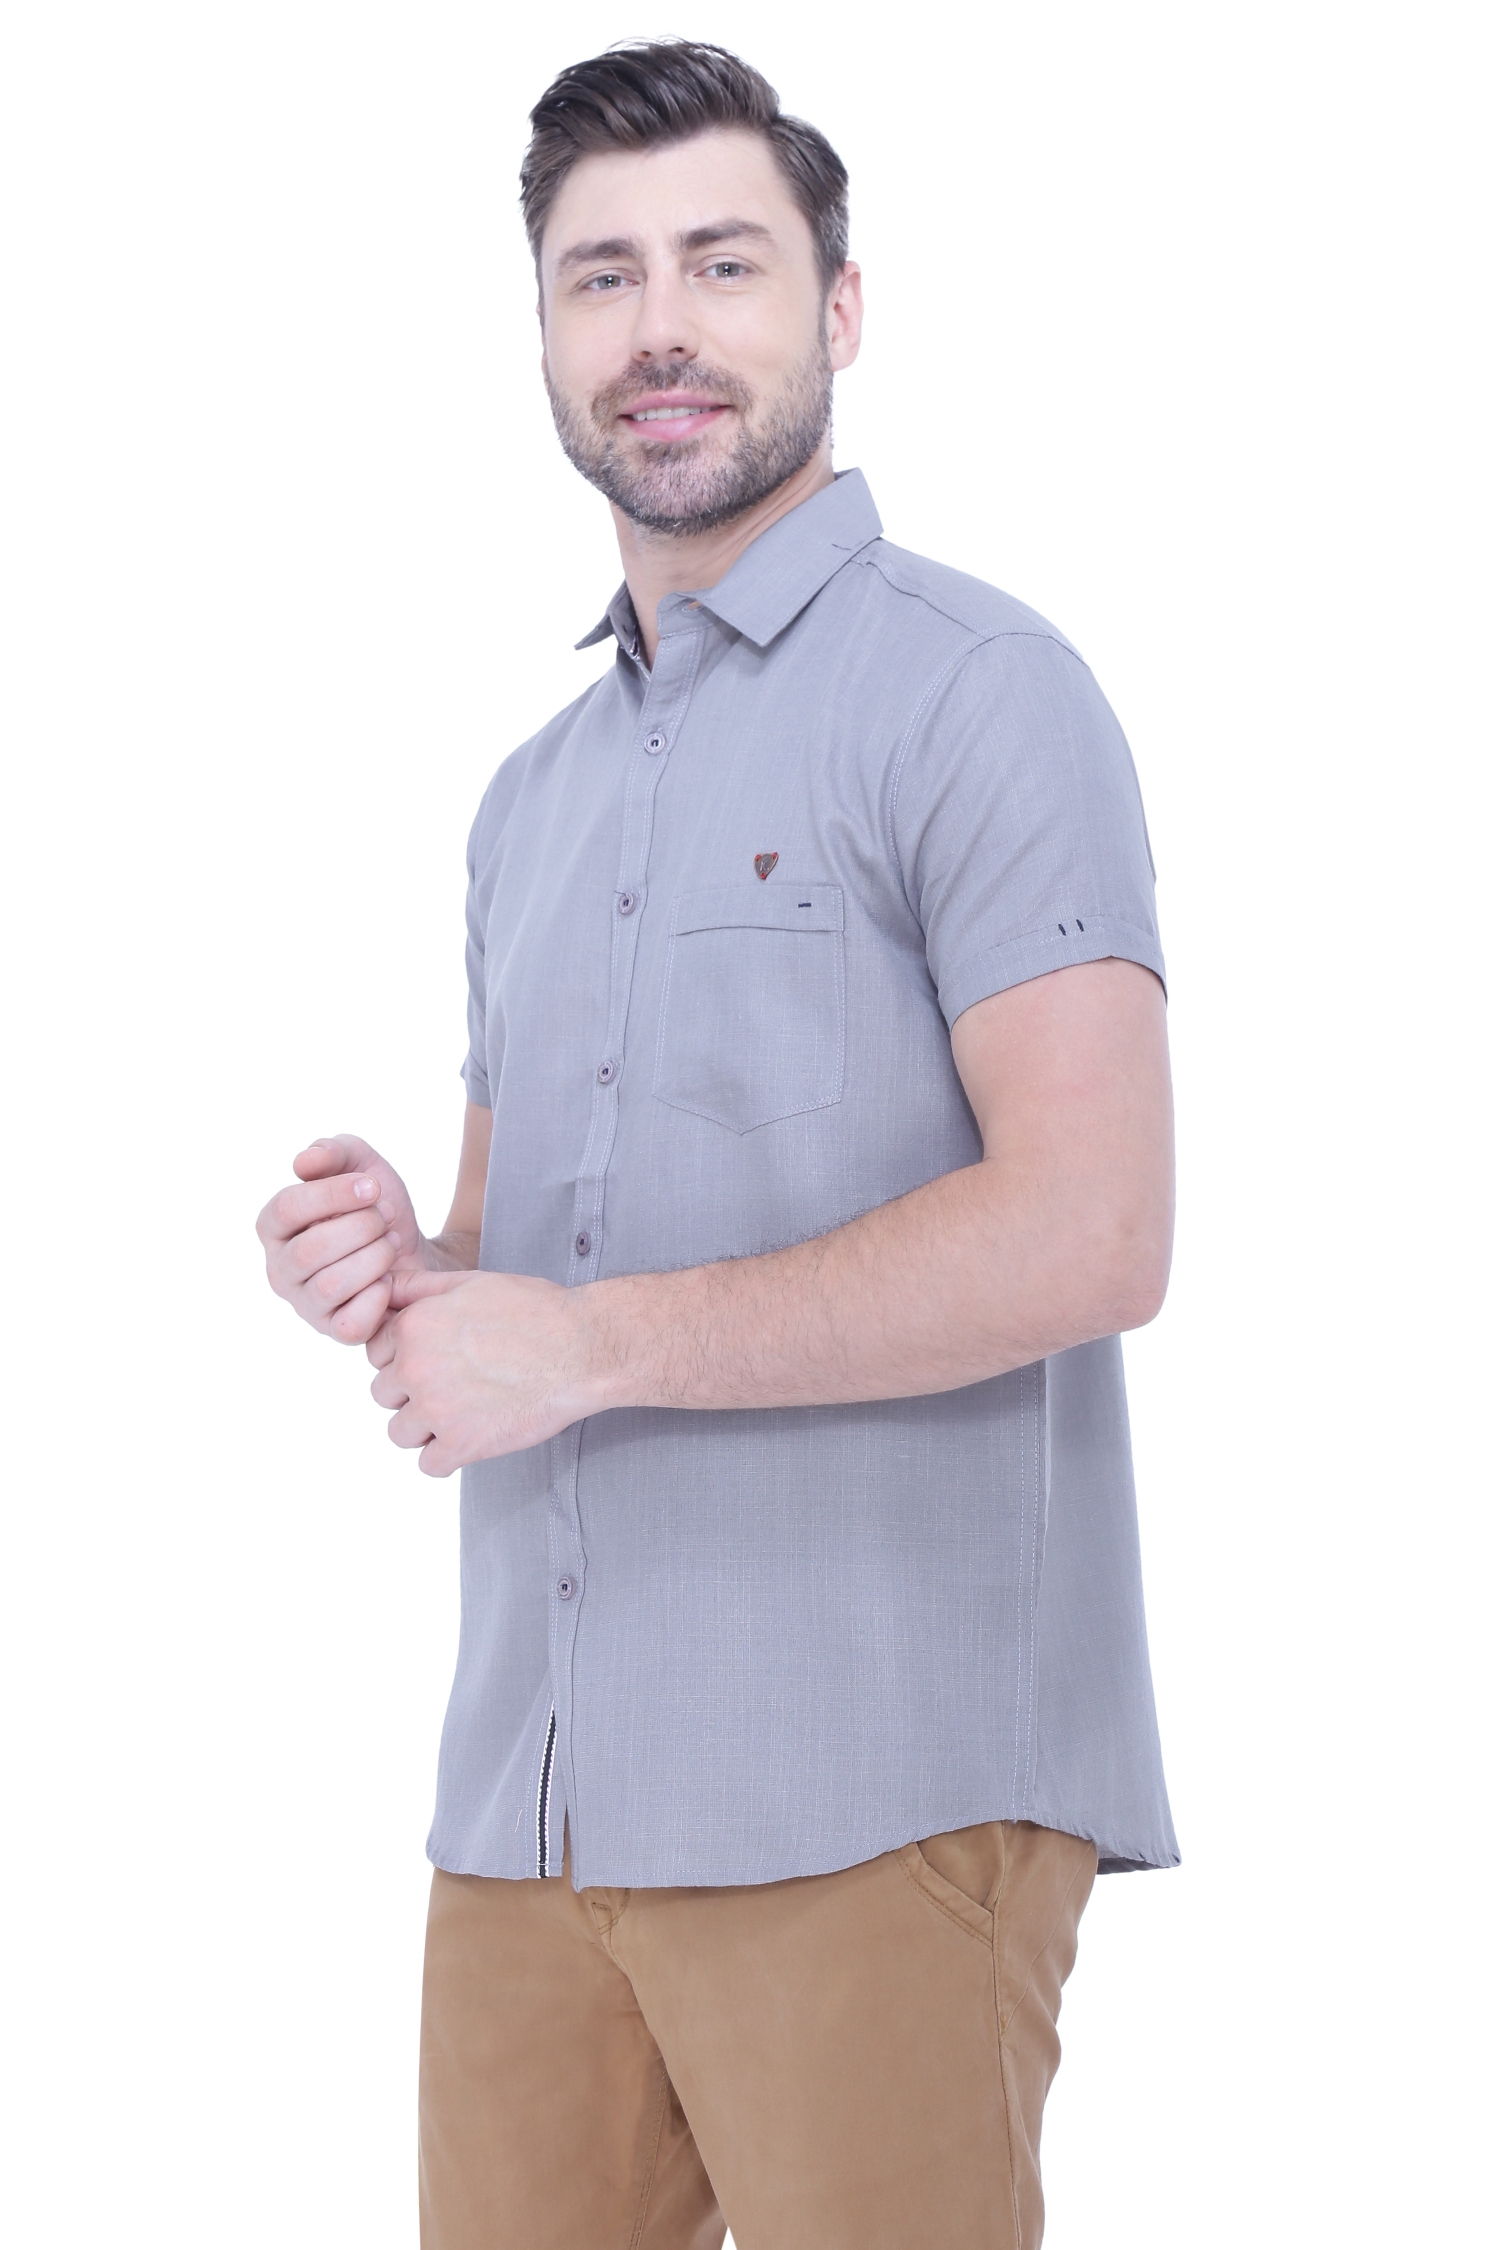 Kuons Avenue | Kuons Avenue Men's Linen Blend Half Sleeves Casual Shirt-KACLHS1236 1